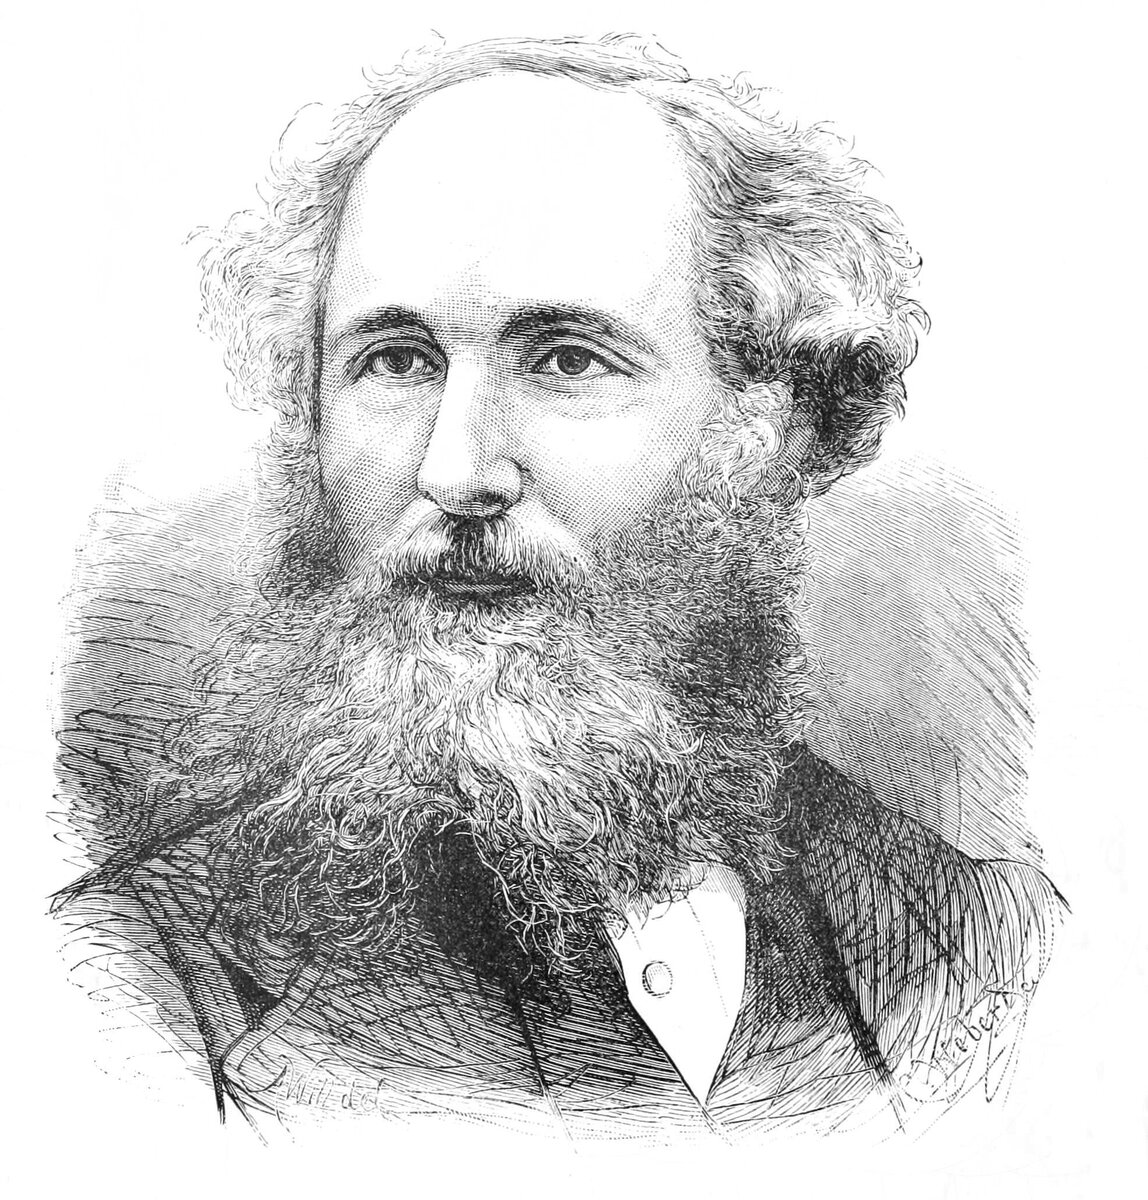 Джеймс Клерк Максвелл (1831-1879) - физик.